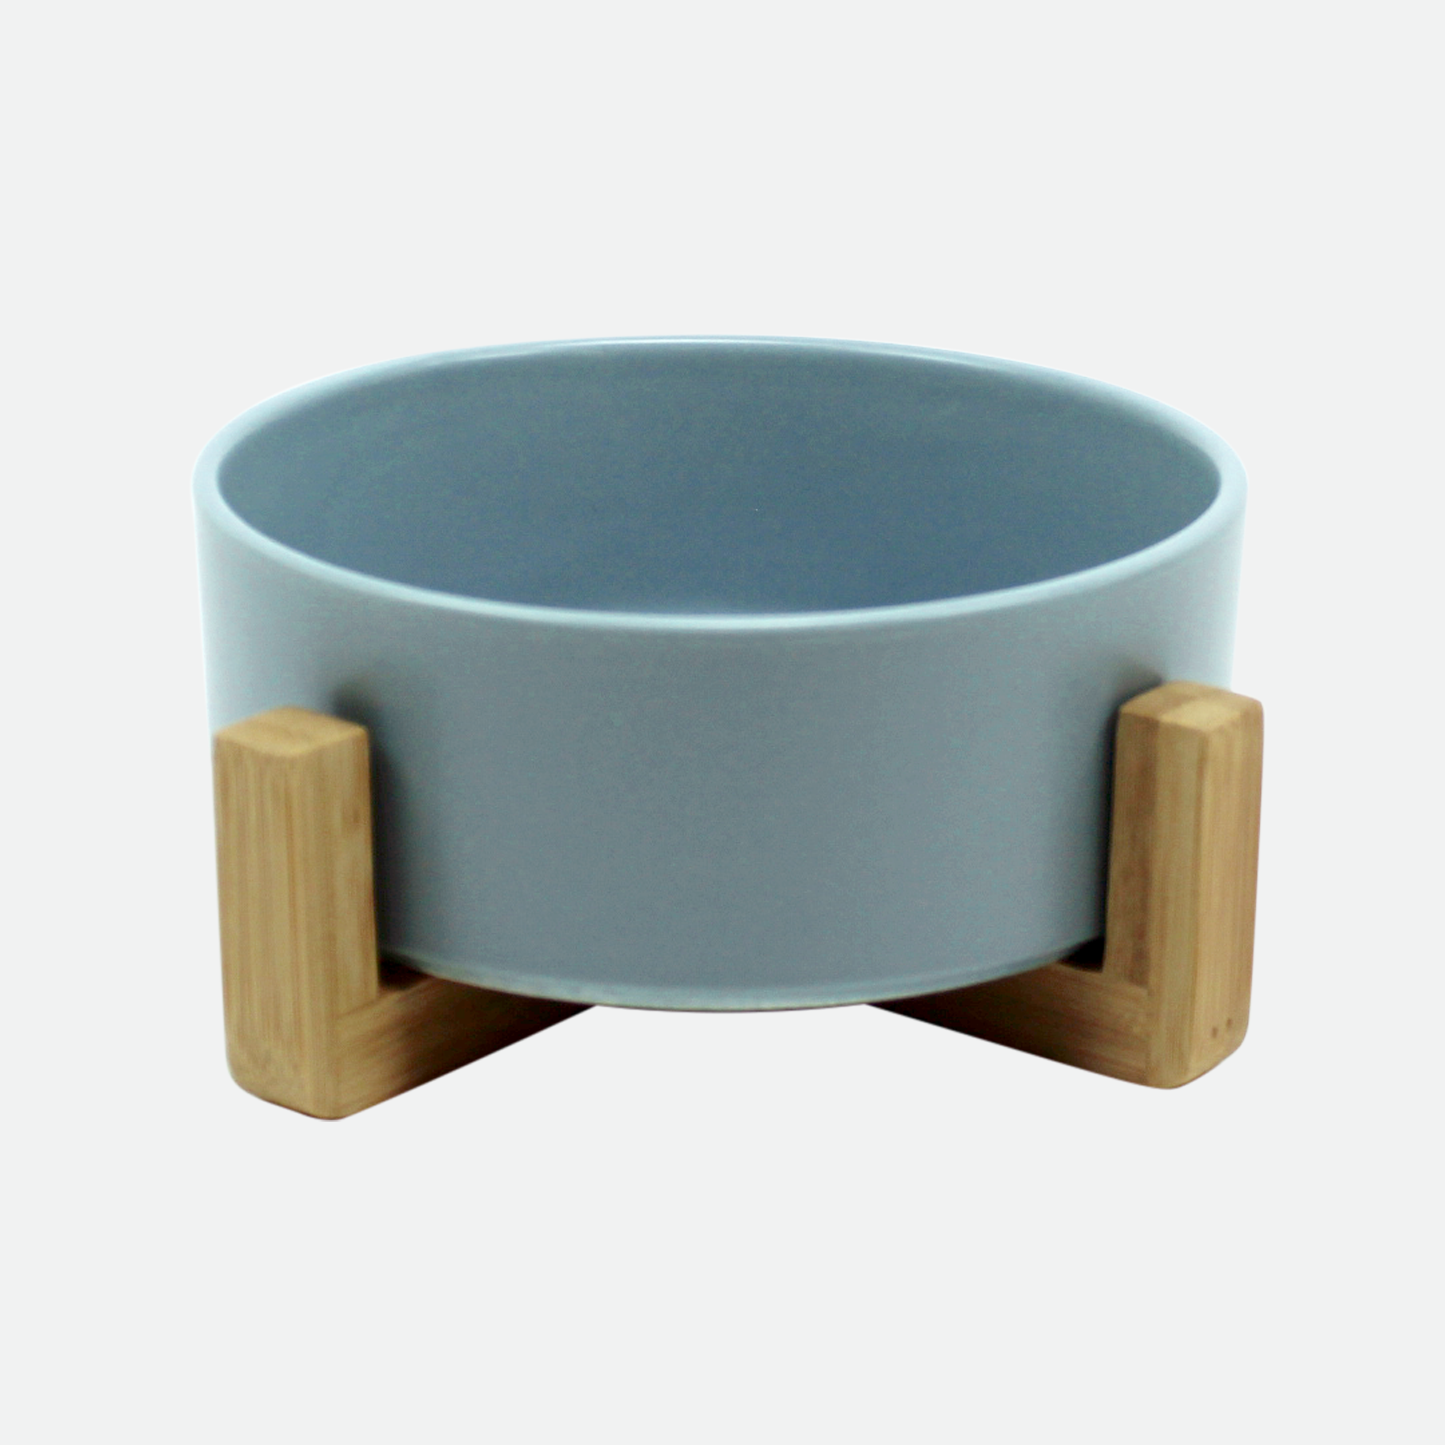 Ceramic bowl on wood pilotis for pet, turquoise